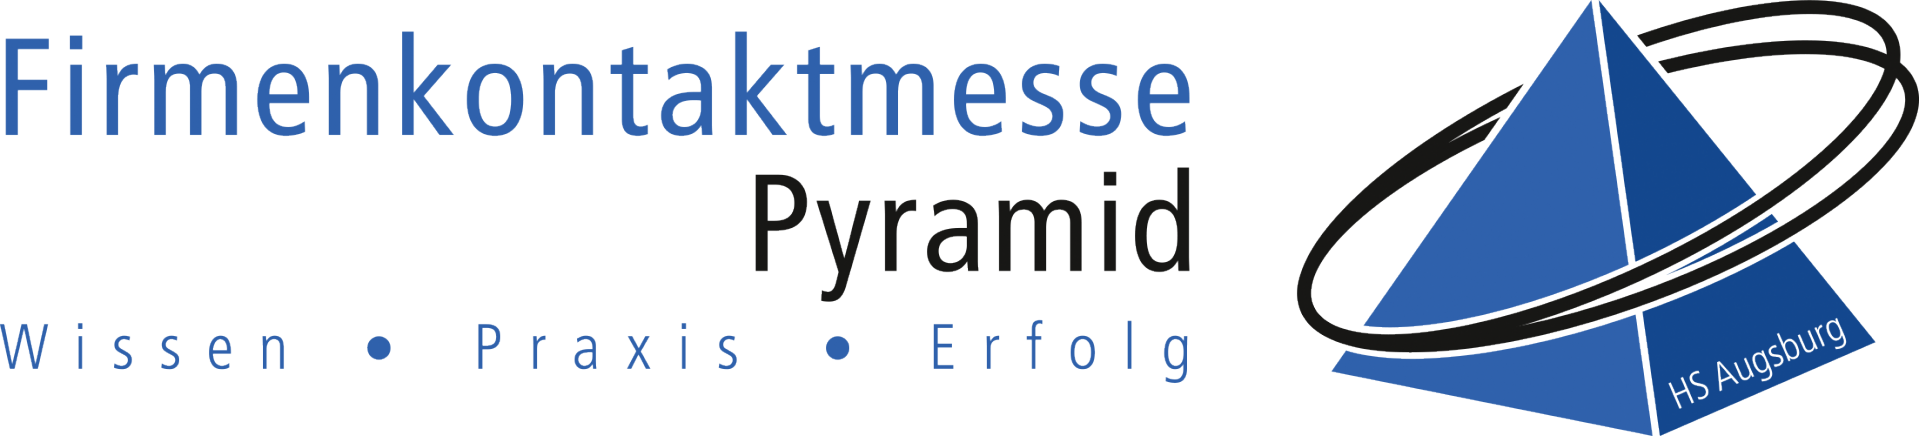 Firmenkontaktmesse Pyramid - Wissen. Praxis. Erfolg